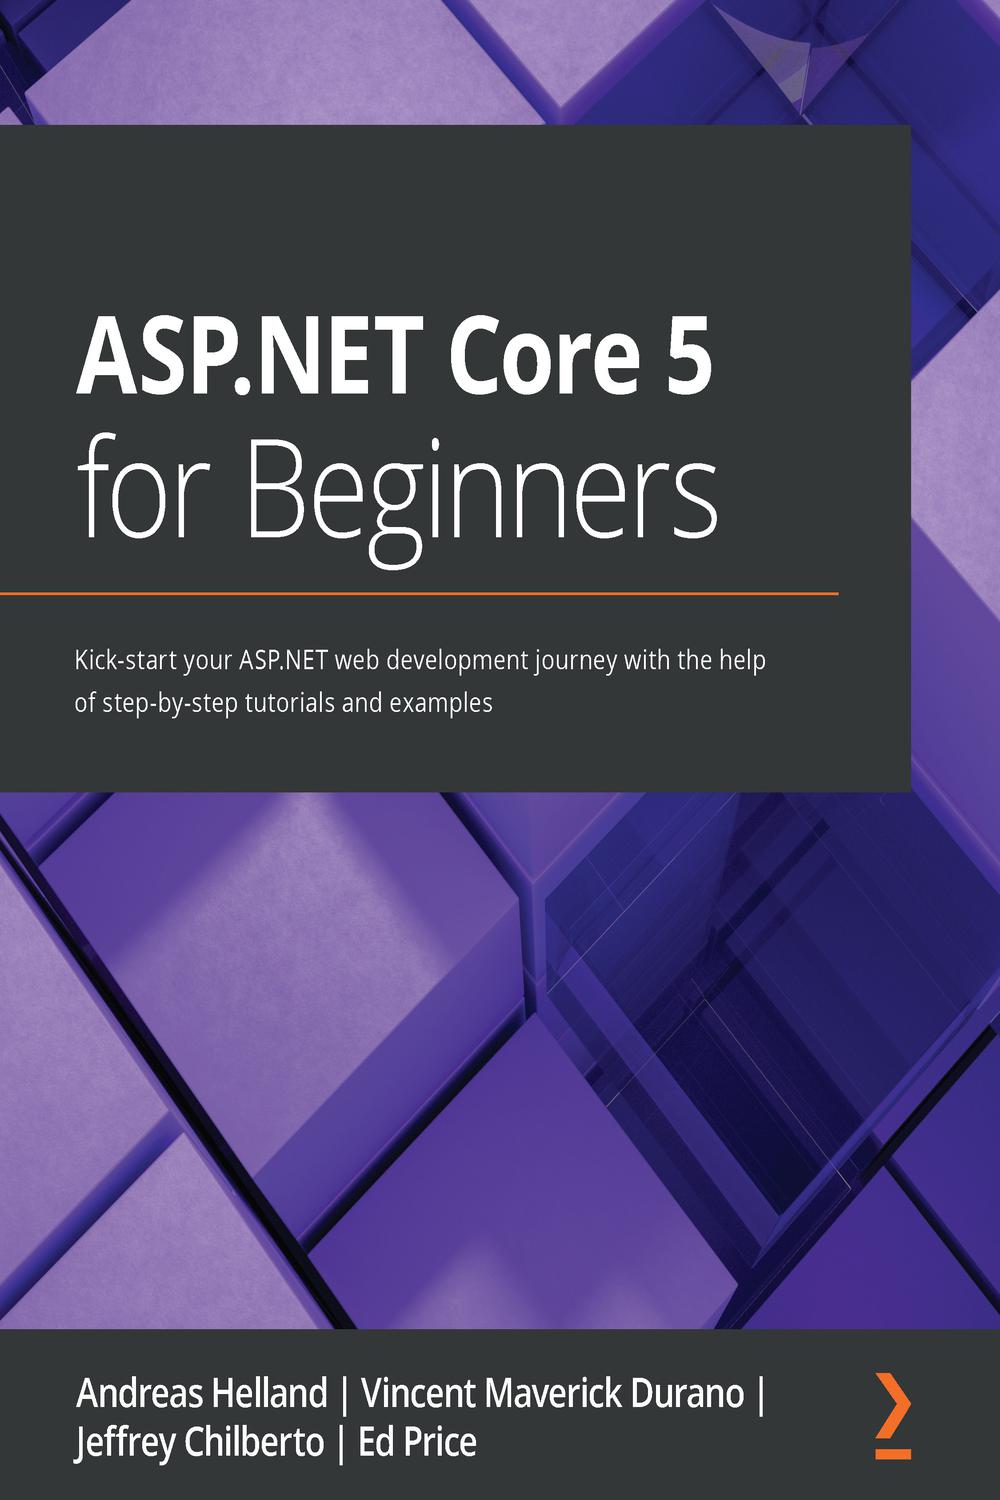 ASP.NET Core 5 for Beginners - Andreas Helland, Vincent Maverick Durano, Jeffrey Chilberto, Ed Price